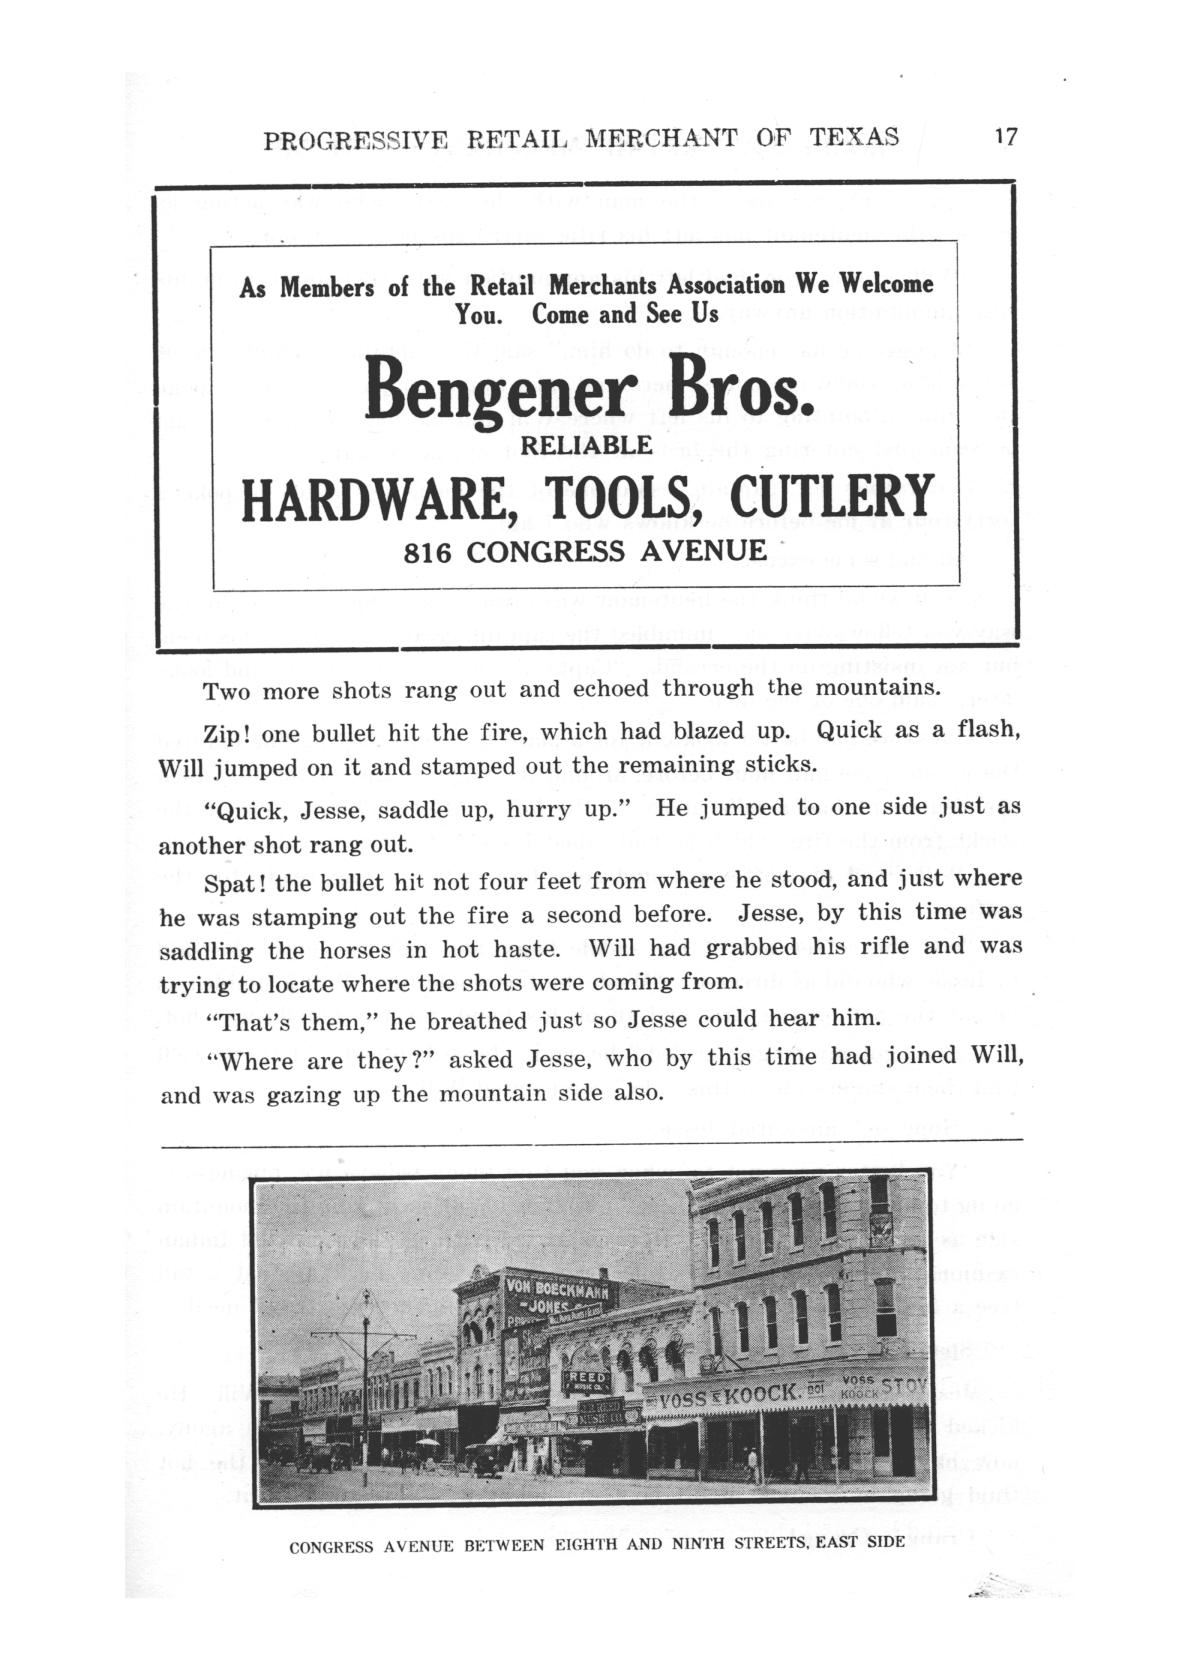 Progresive Retail Merchant of Texas, Volume 1, Number 2, July 1915
                                                
                                                    17
                                                